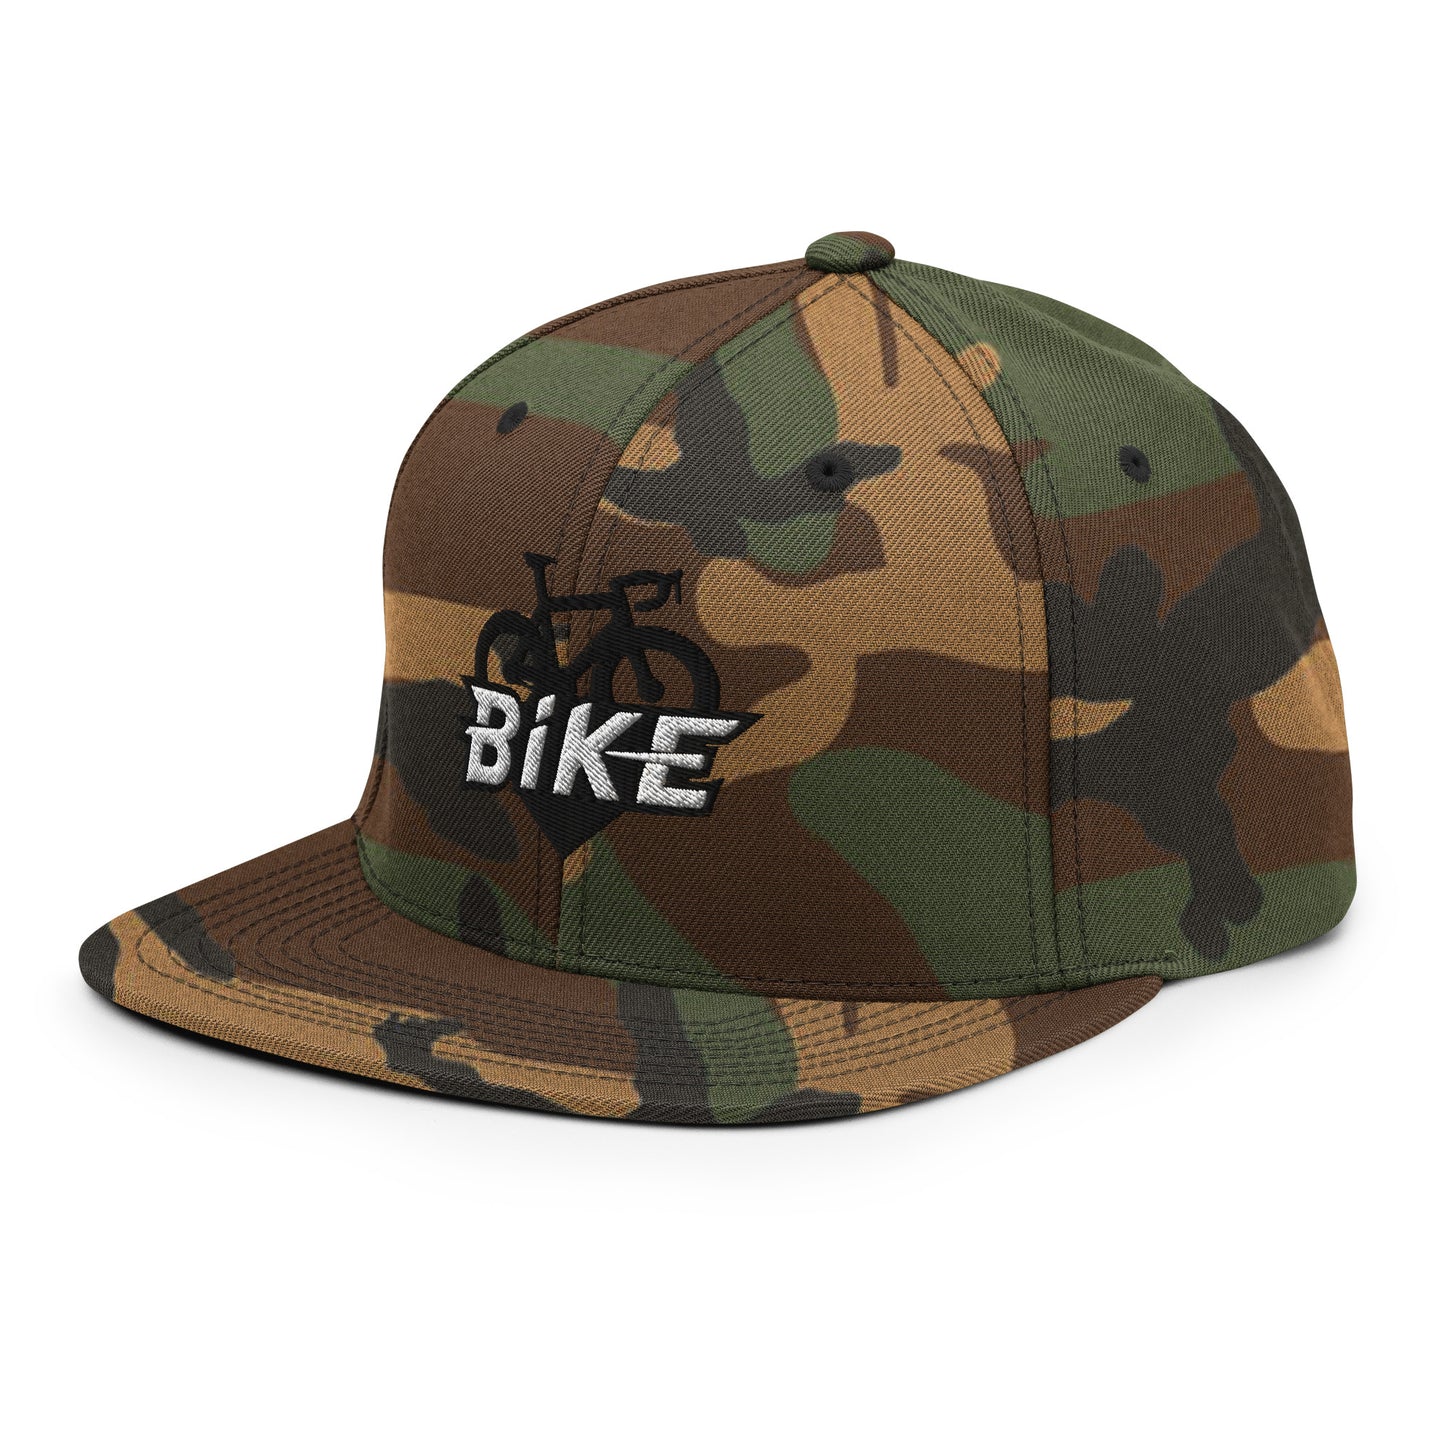 Race Bike Logo 3D Puff Embroidered Snapback Hat